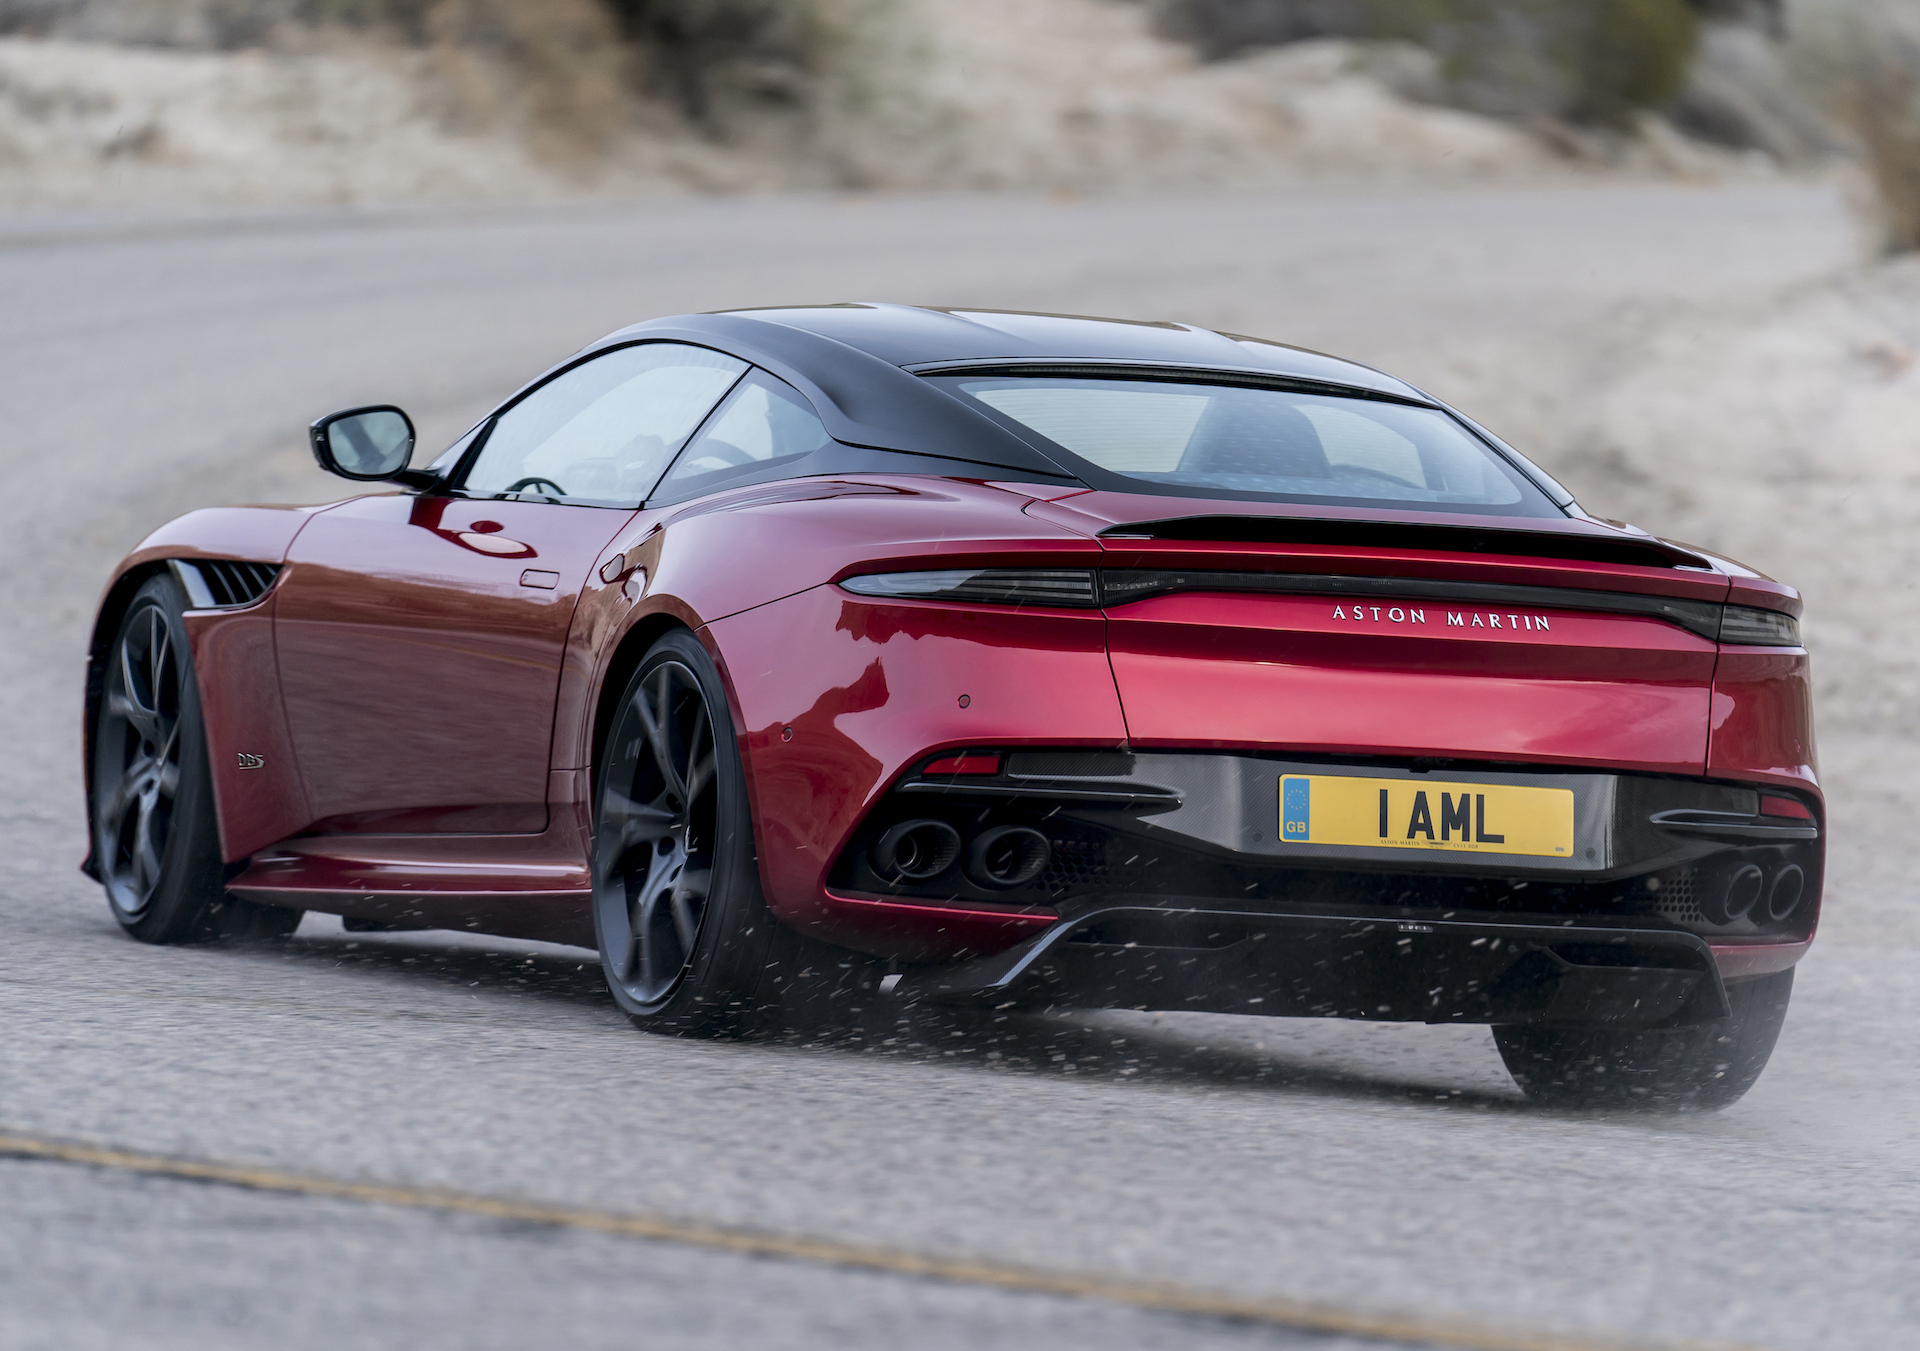 Aston Martin DBS Superleggera is James Bond's new car - Automacha